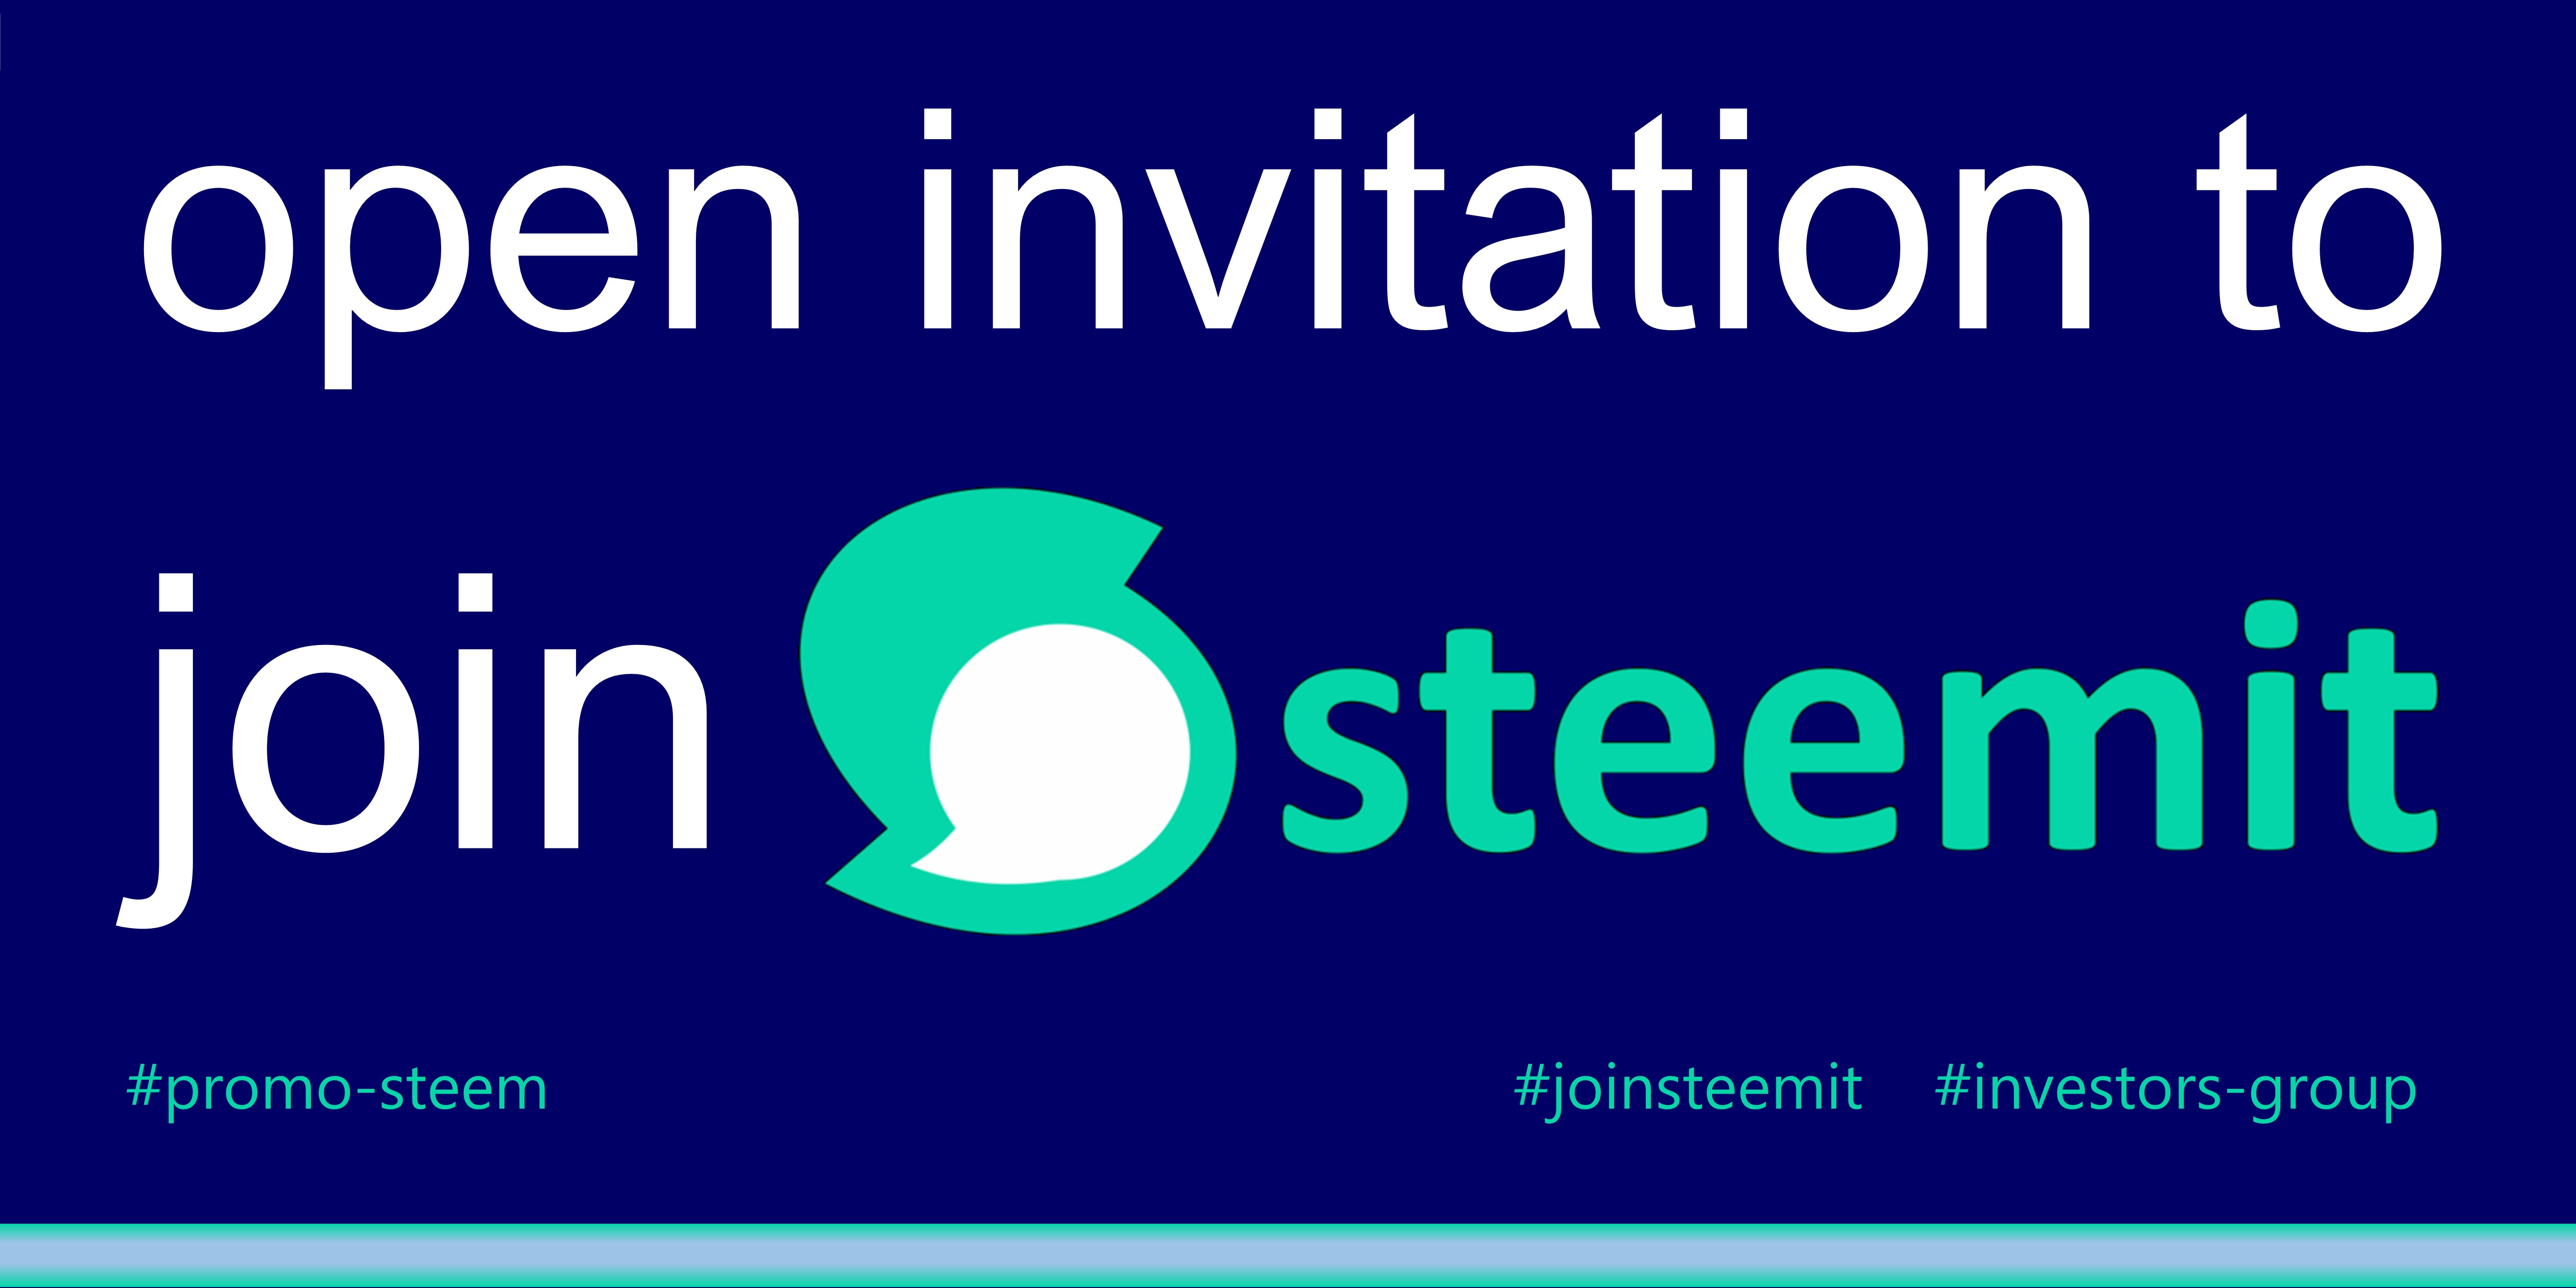 Invitation to join Steemit.jpg